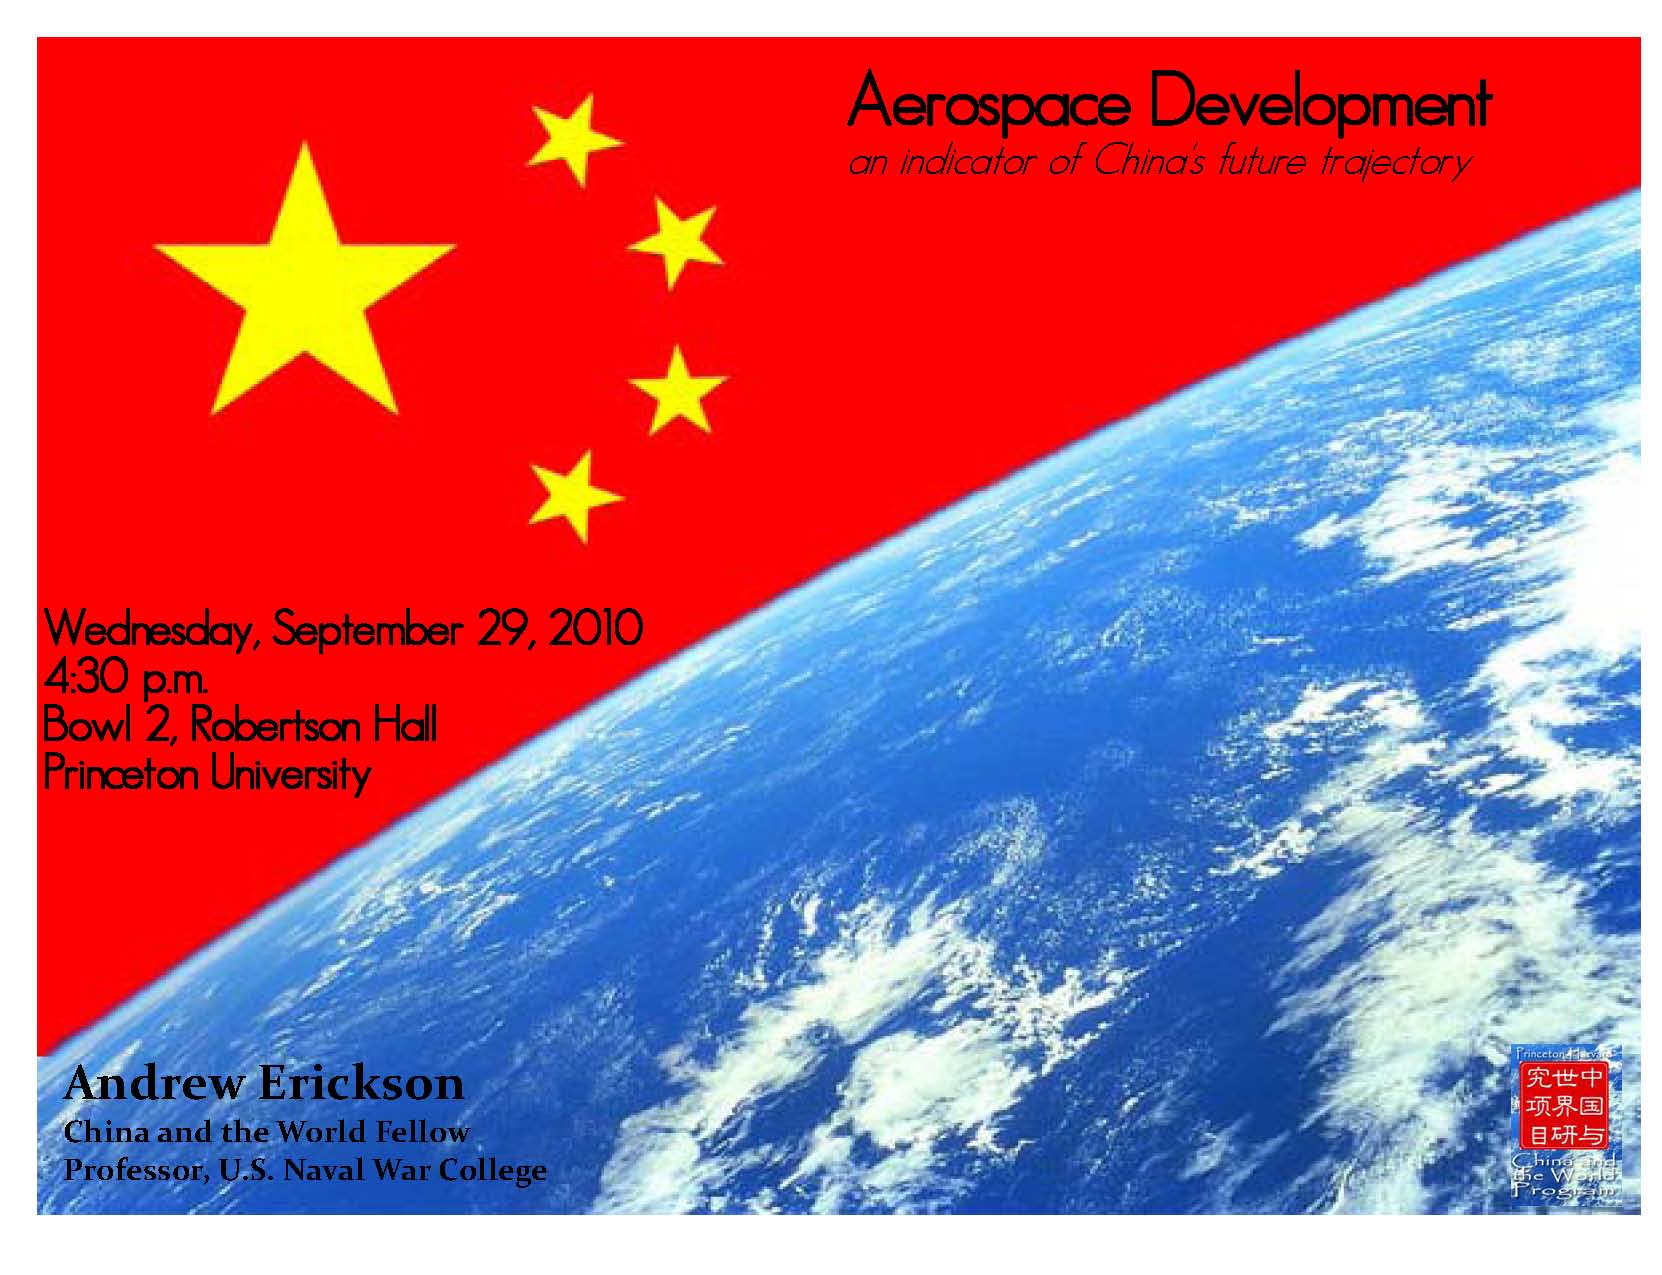 Princeton University--Aerospace Development Lecture--Key Info